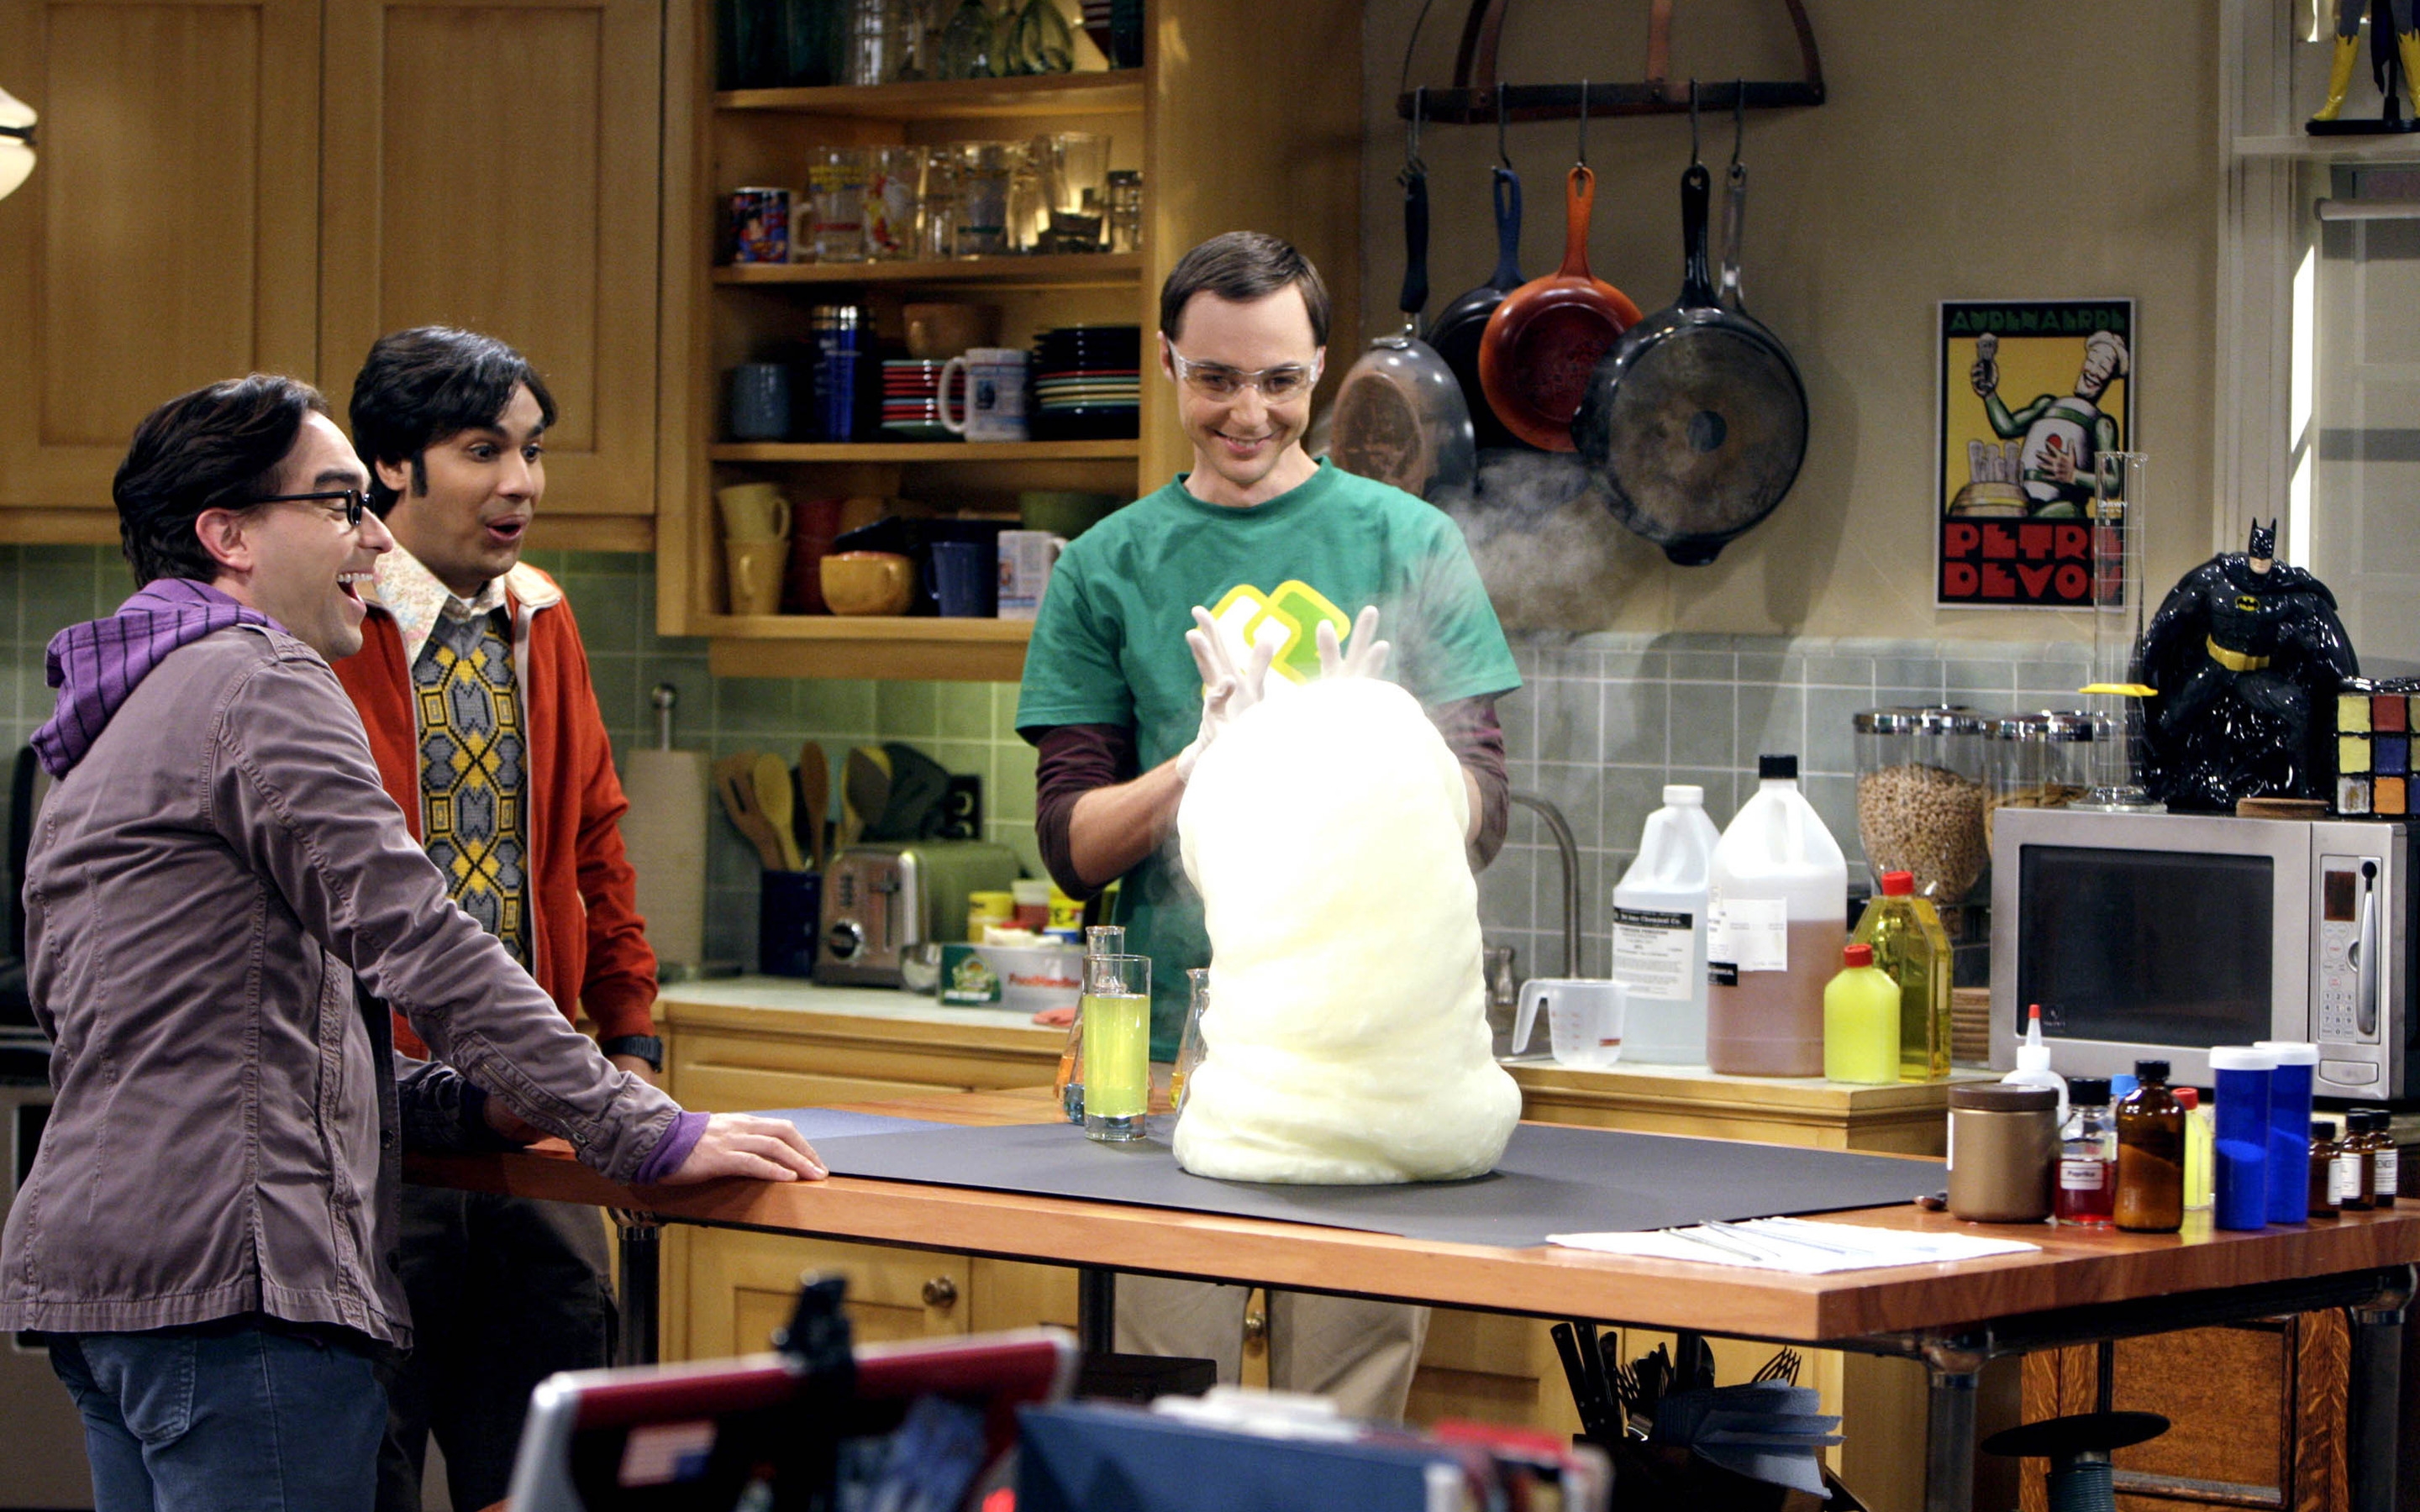 The Big Bang Theory Experiment for 2880 x 1800 Retina Display resolution